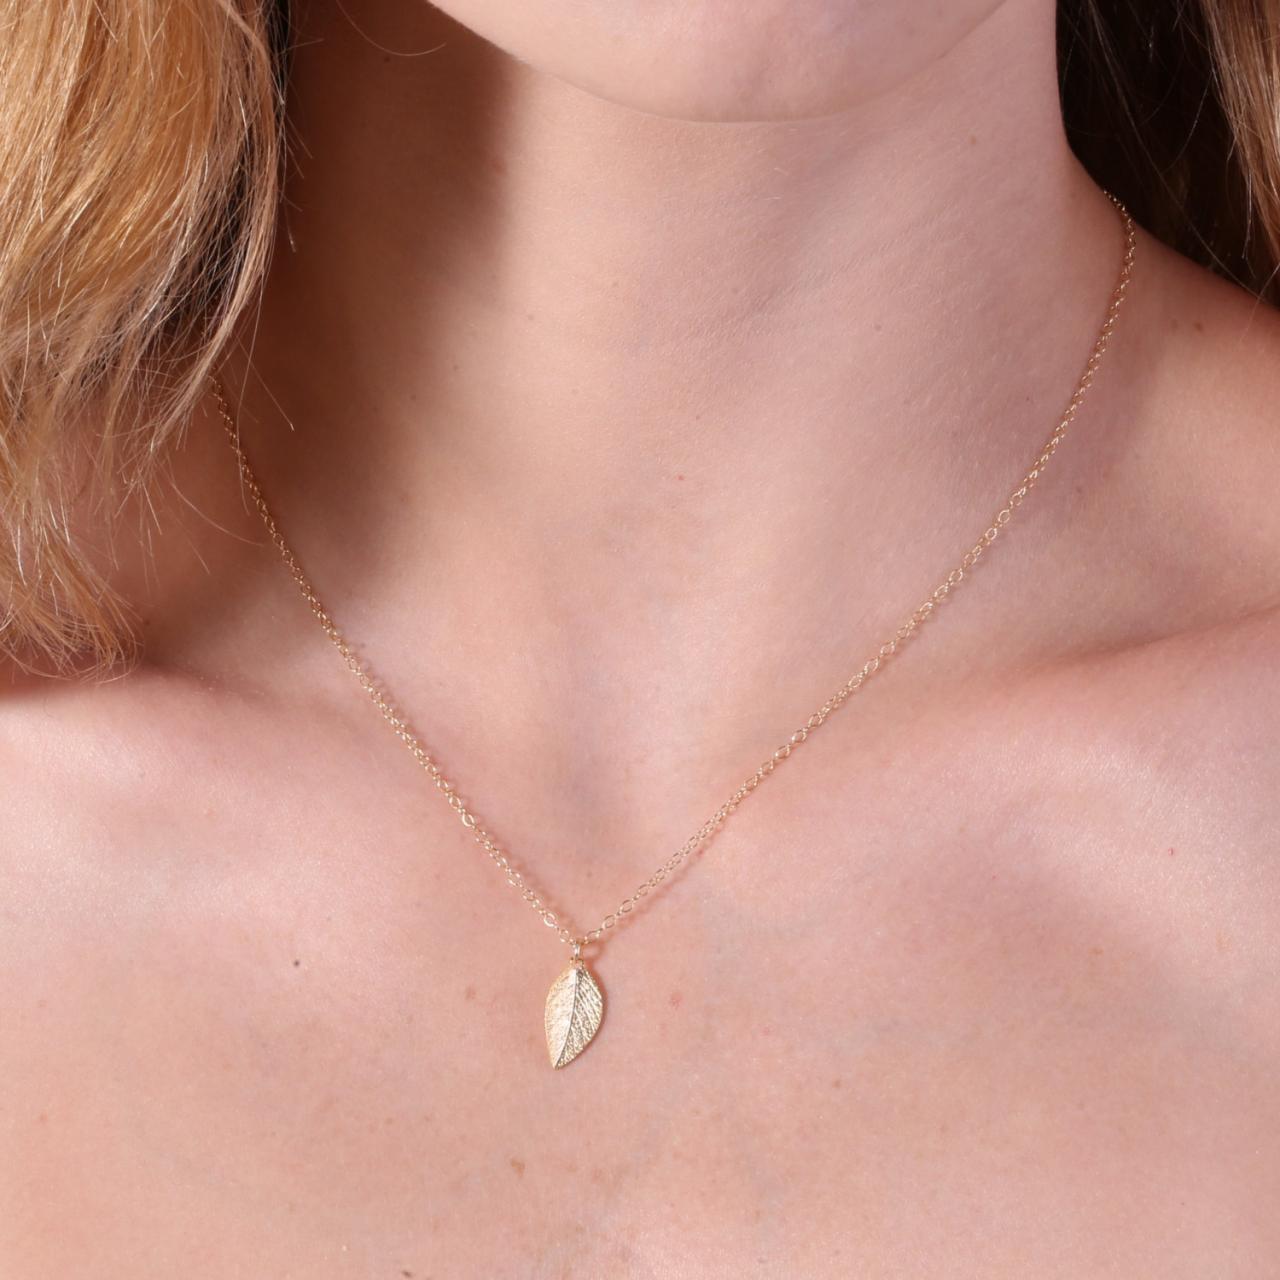 Gold Necklace, Gold Leaf Necklace, Dainty Necklace, Simple Gold Necklace, Everyday Necklace, Leaf Jewelry - D40